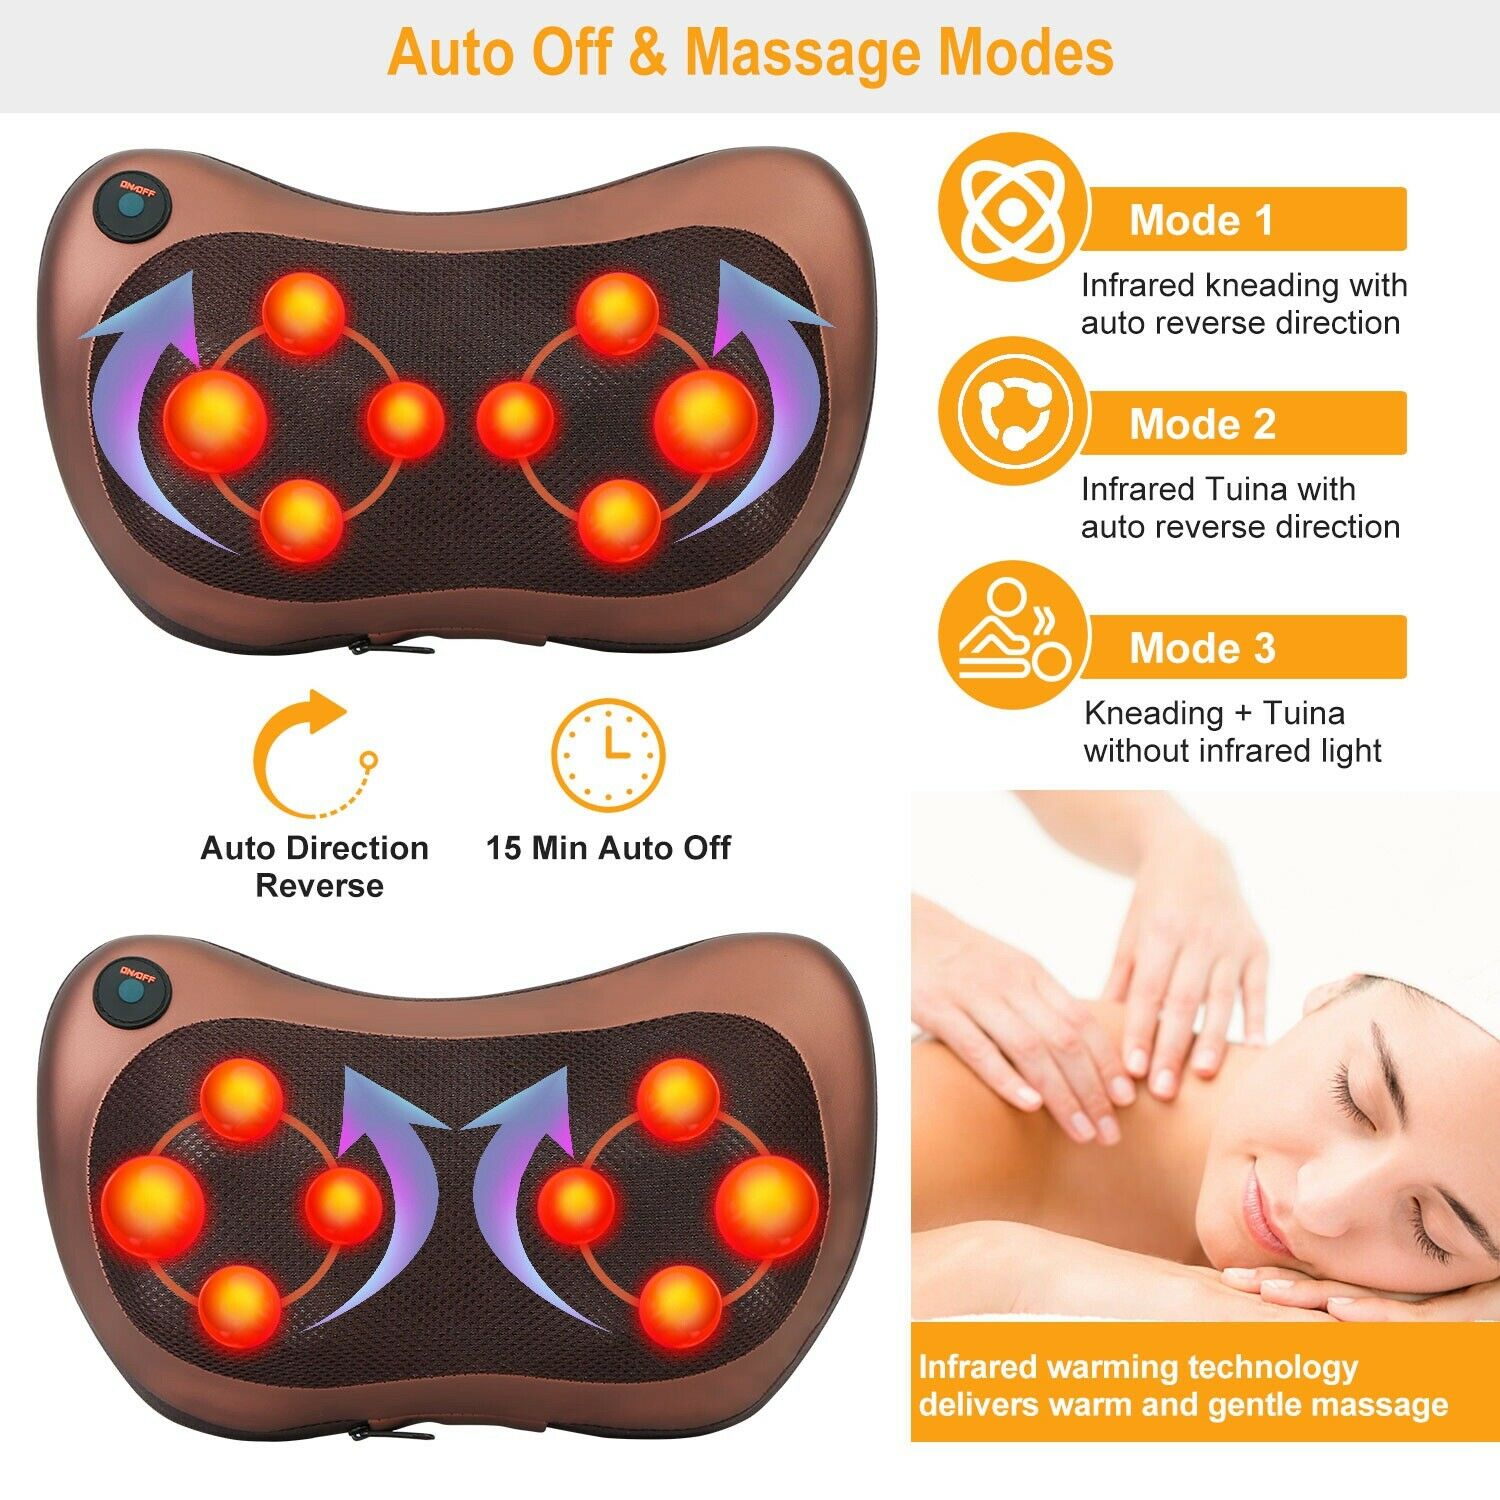 Shiatsu Neck and Back Massager - 8 Heated Rollers Kneading Massage